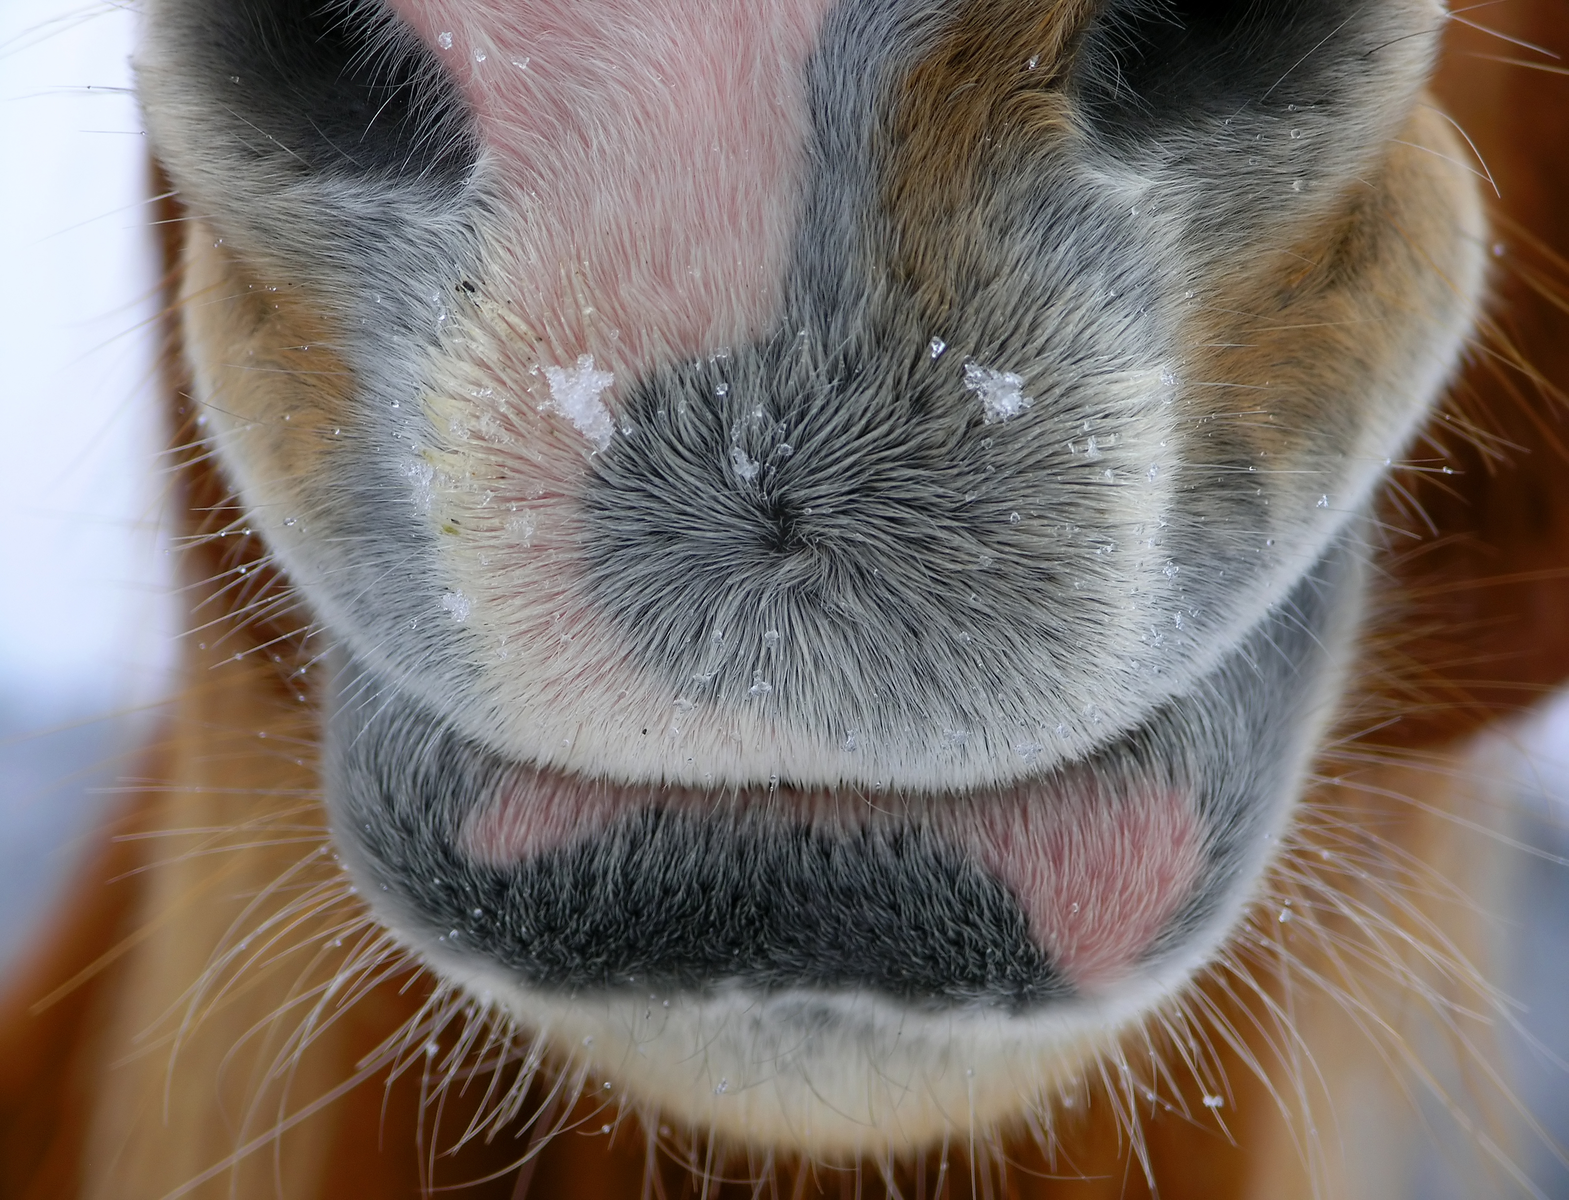 Better immunity when horses get probiotics